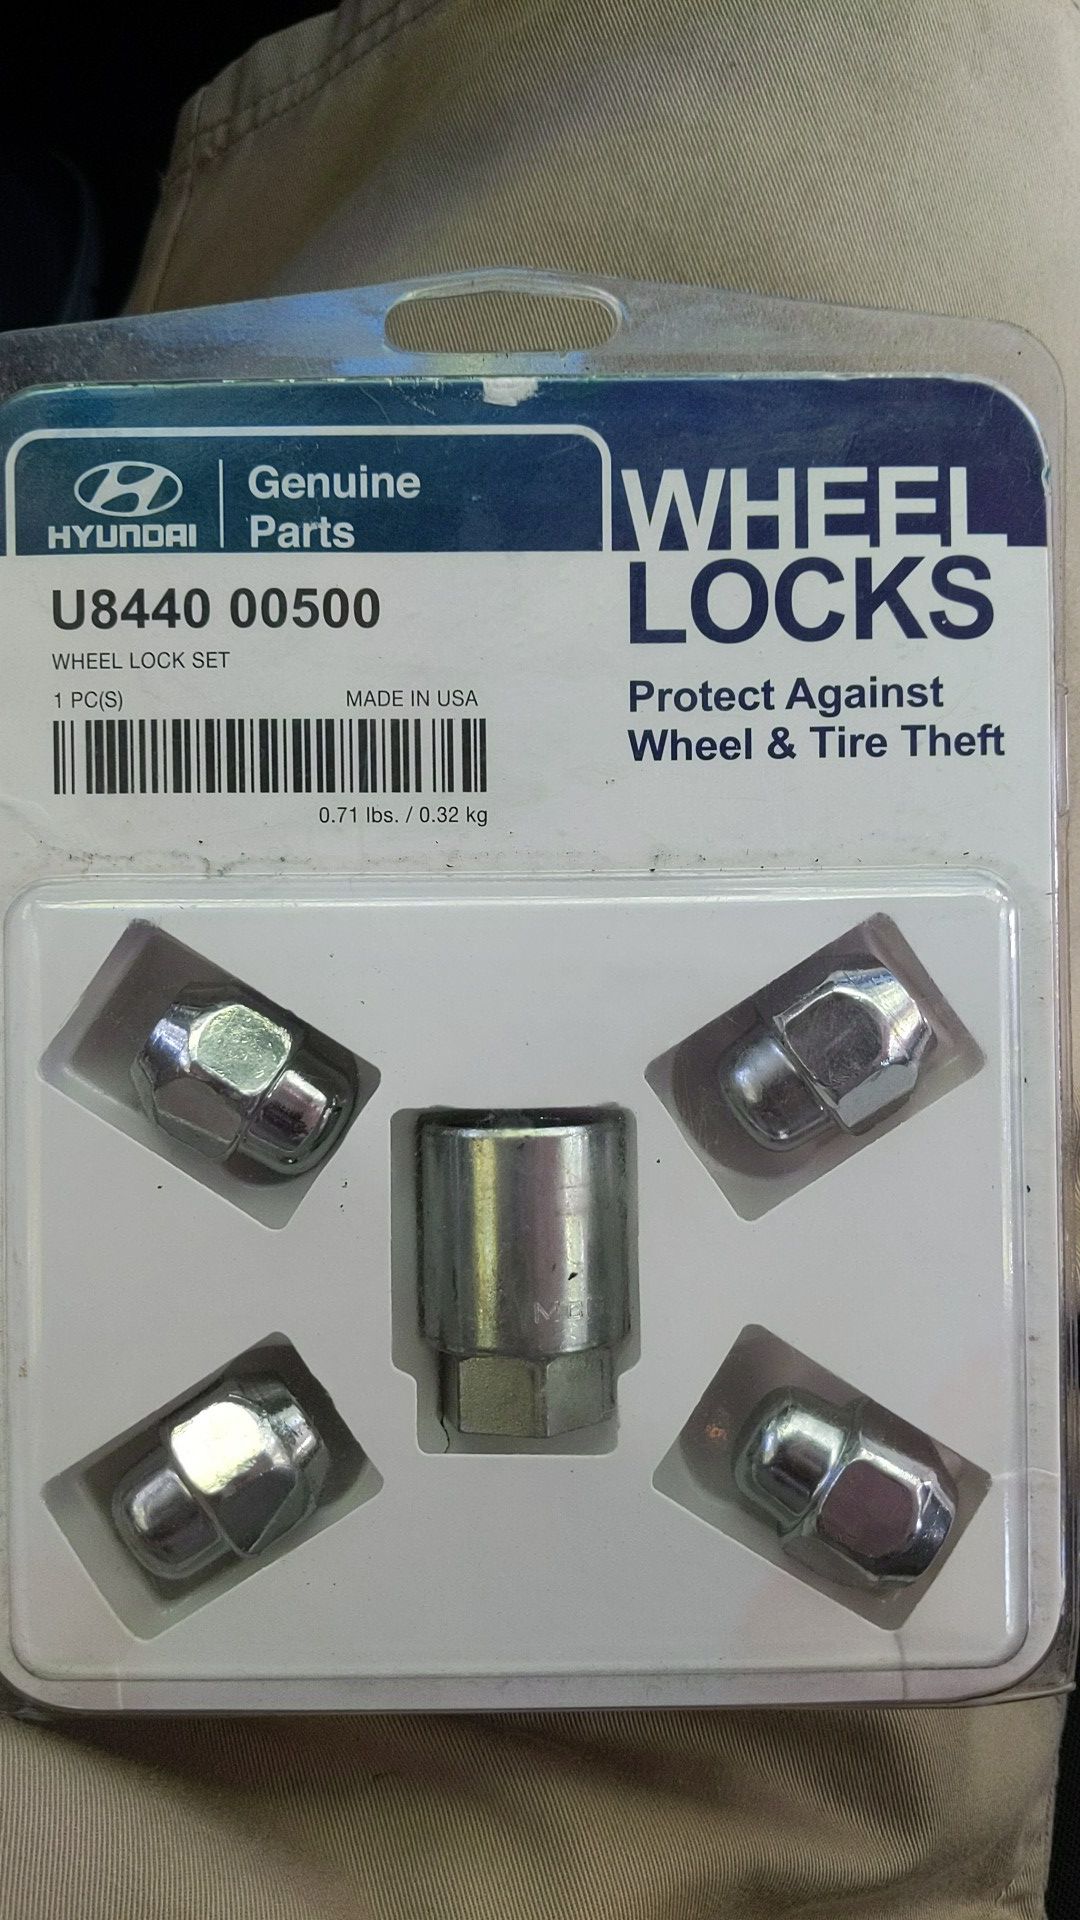 Hyundai Genuine Parts Wheel Lock Set